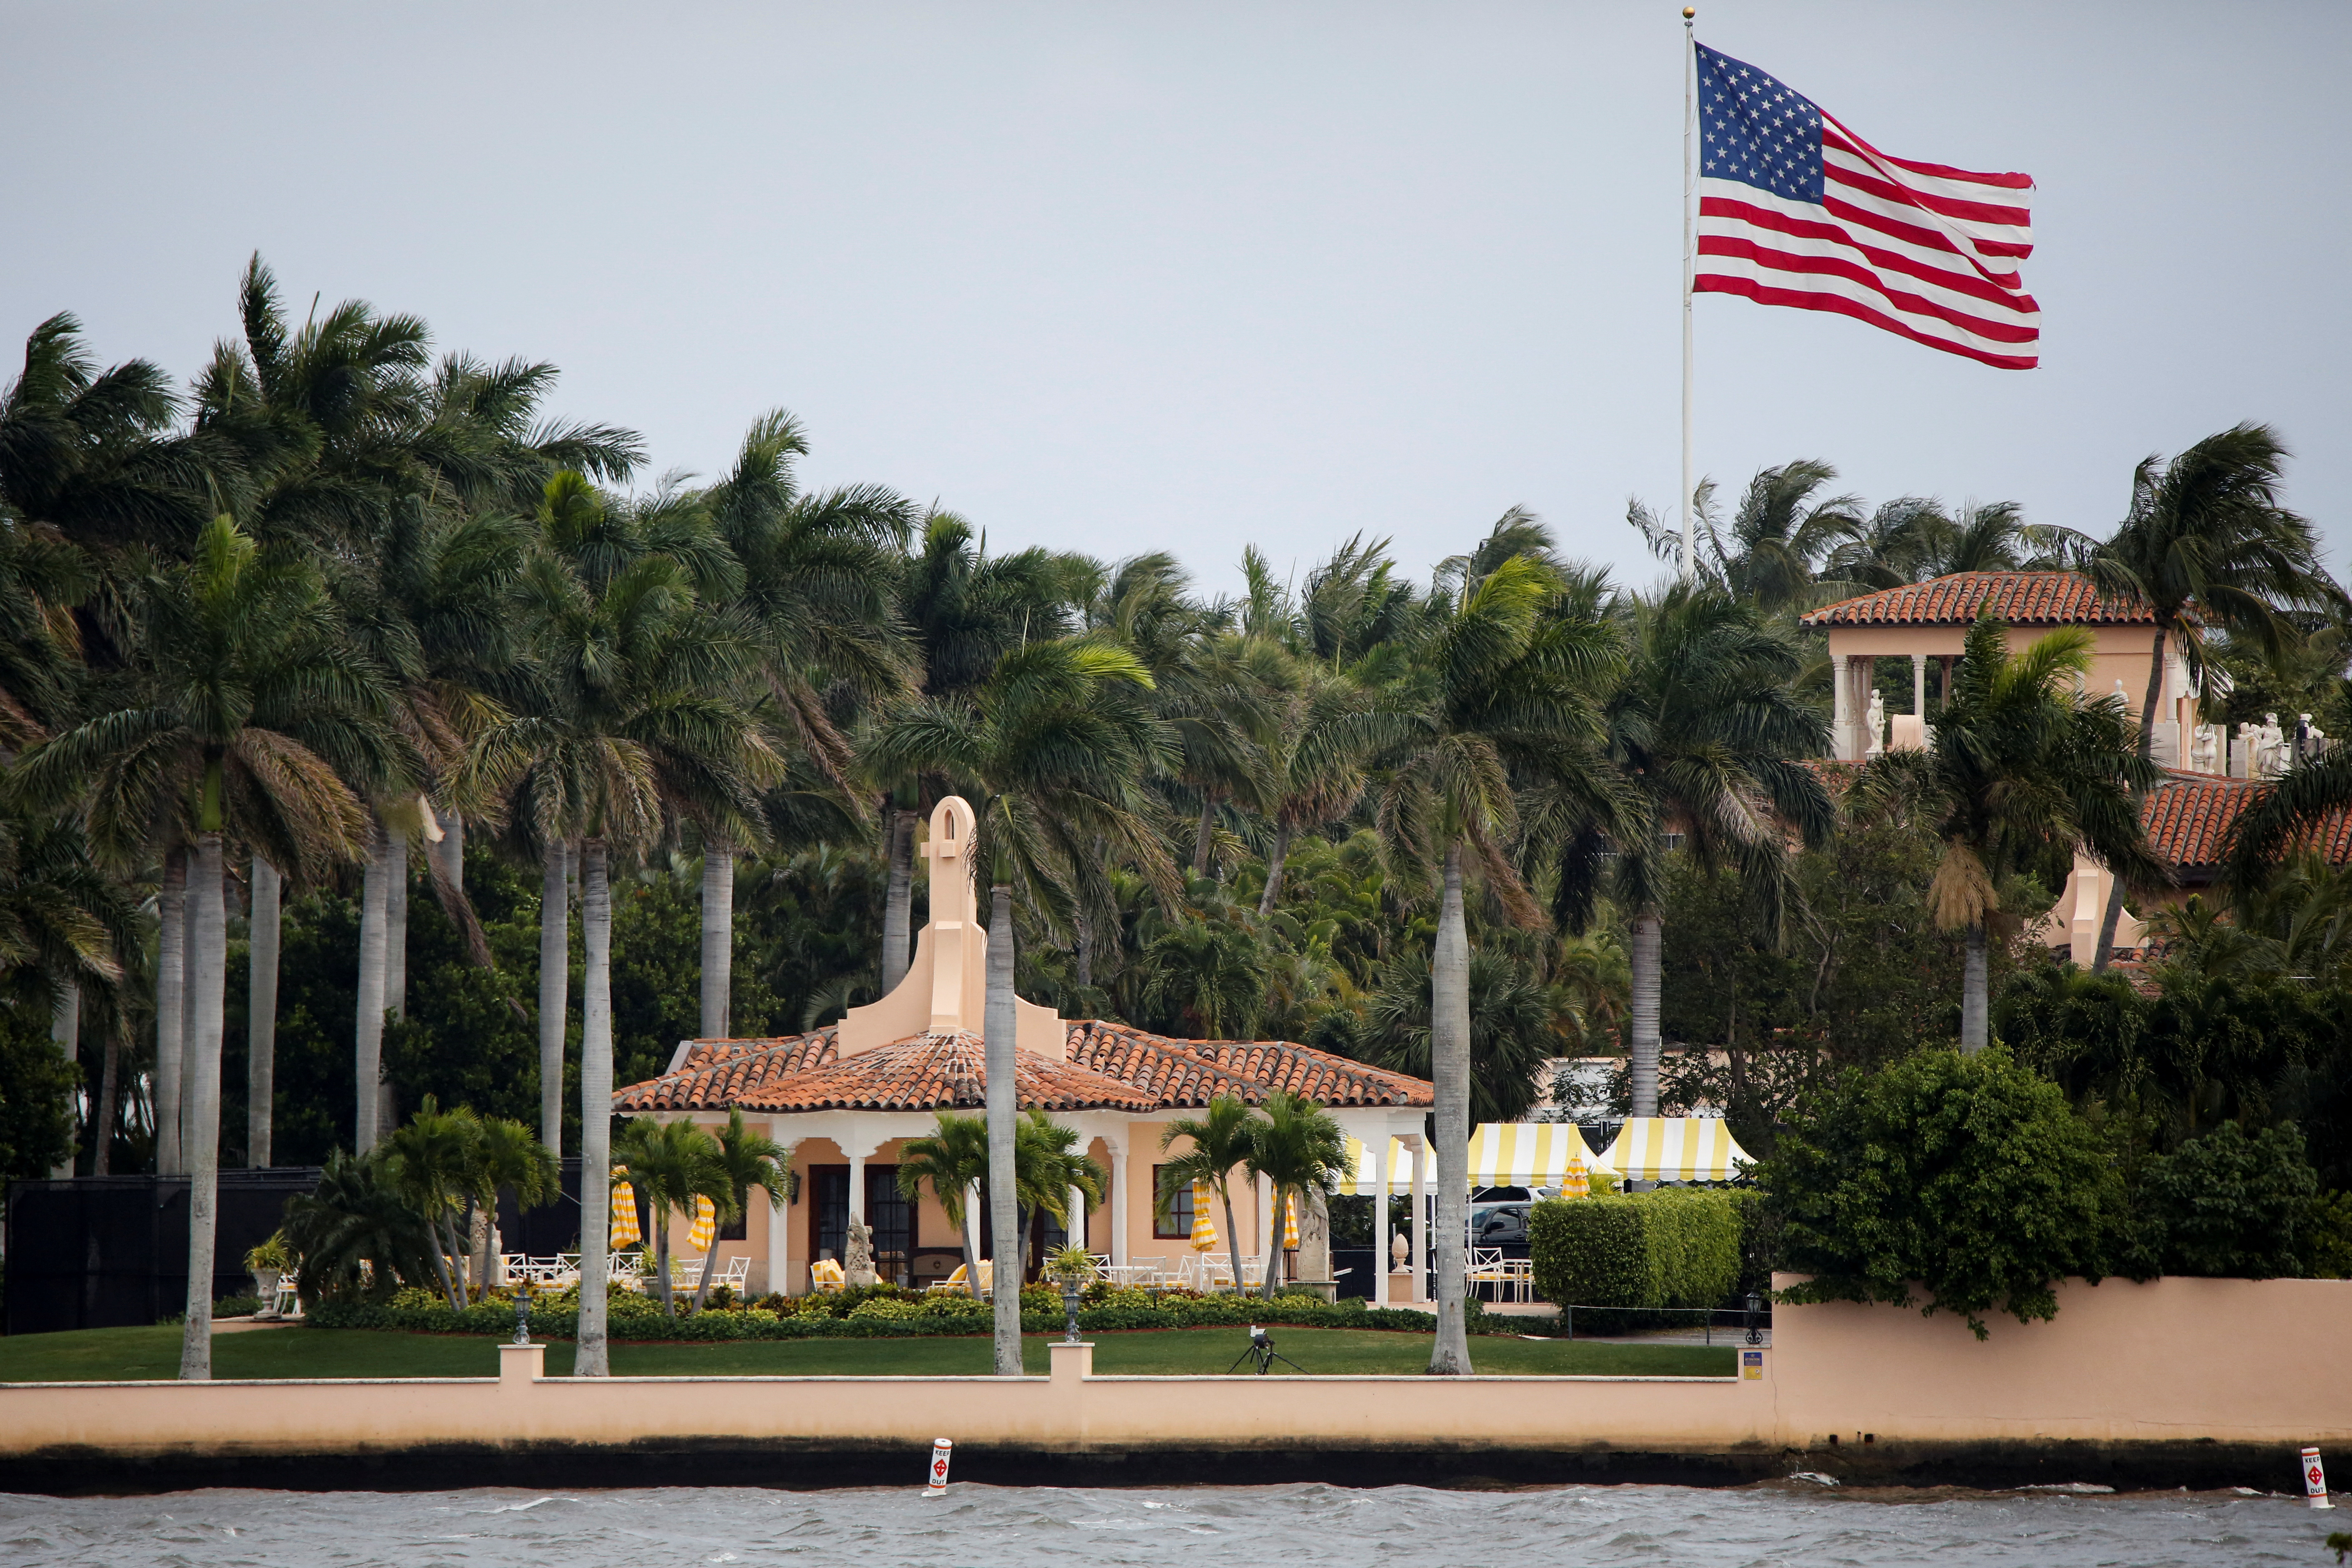 Former U.S. President Donald Trump Mar-a-Lago resort in Palm Beach